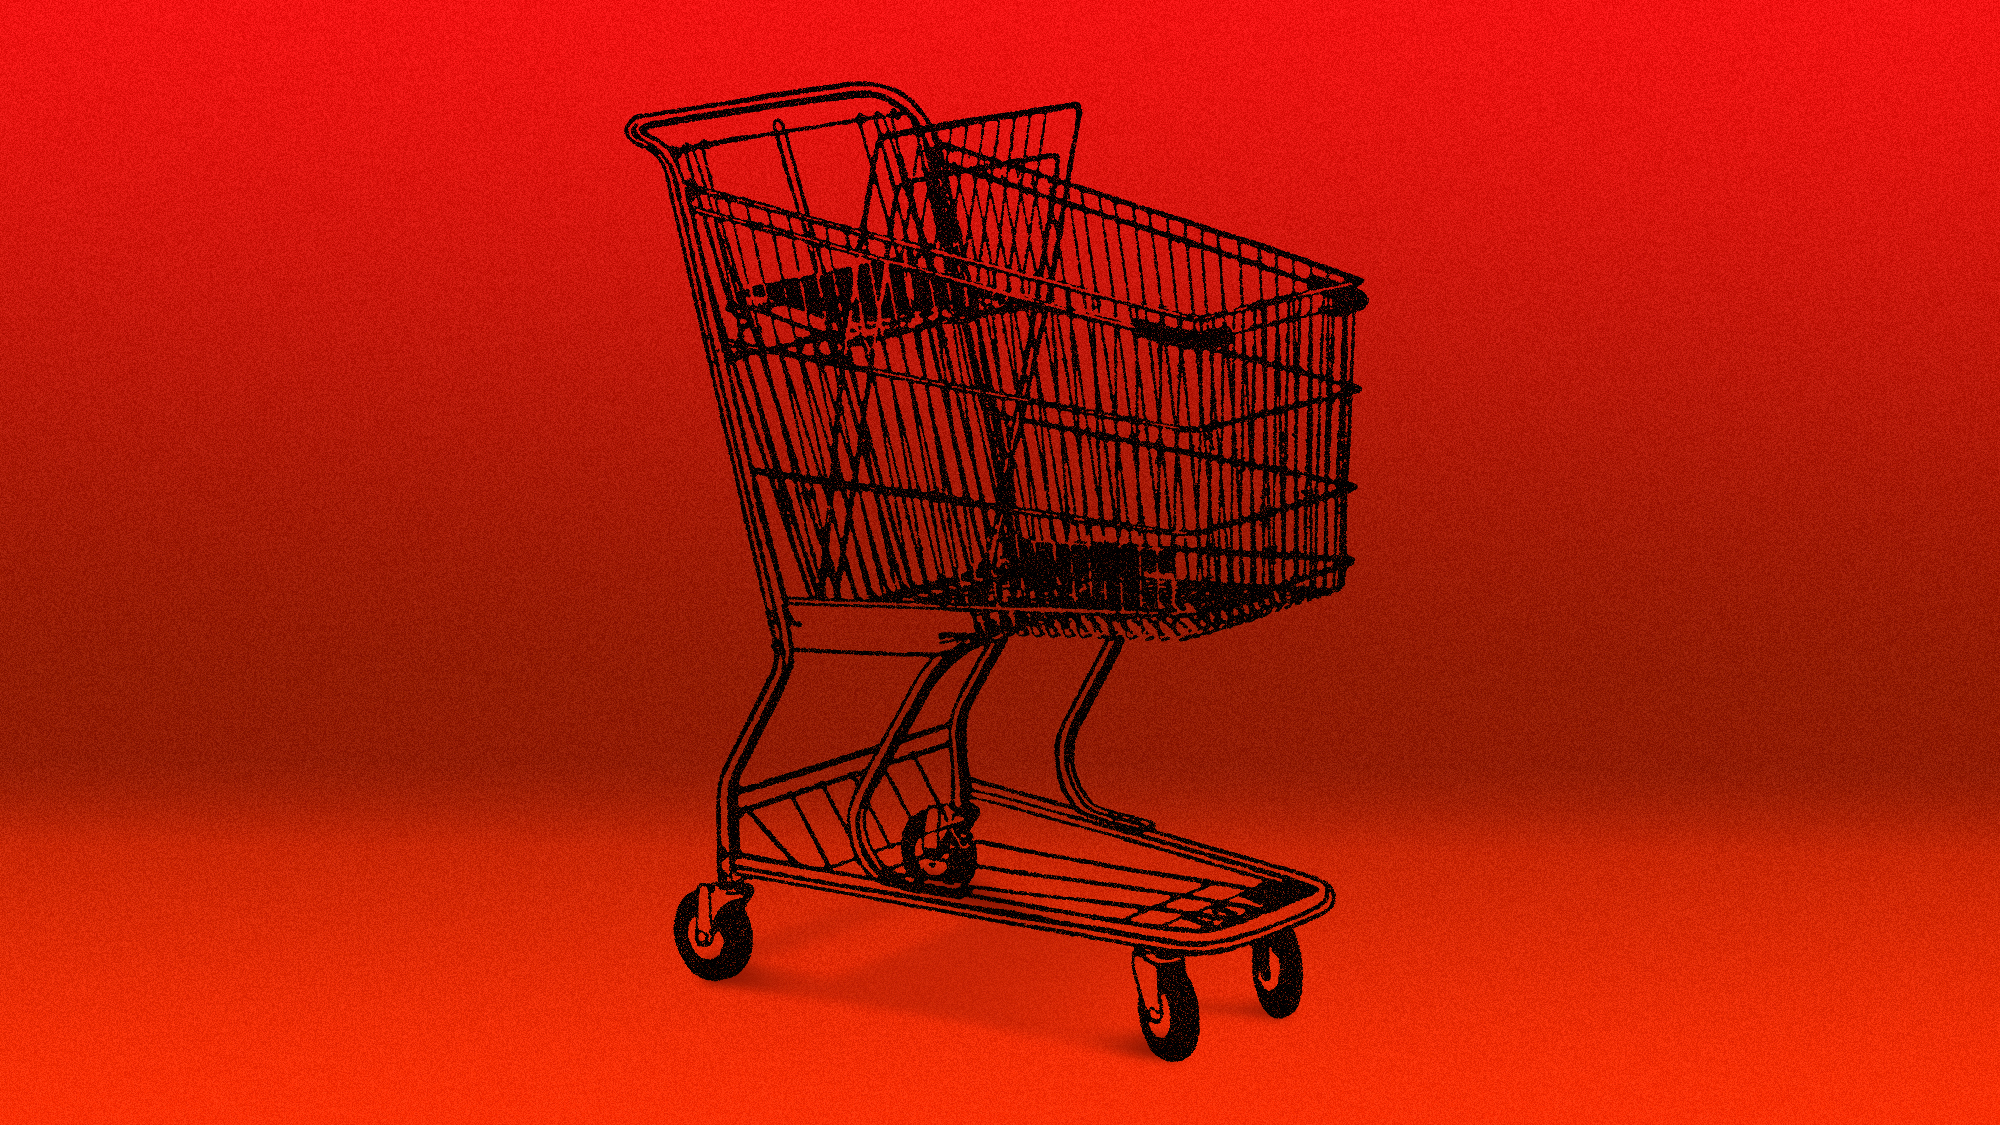 An empty grocery cart